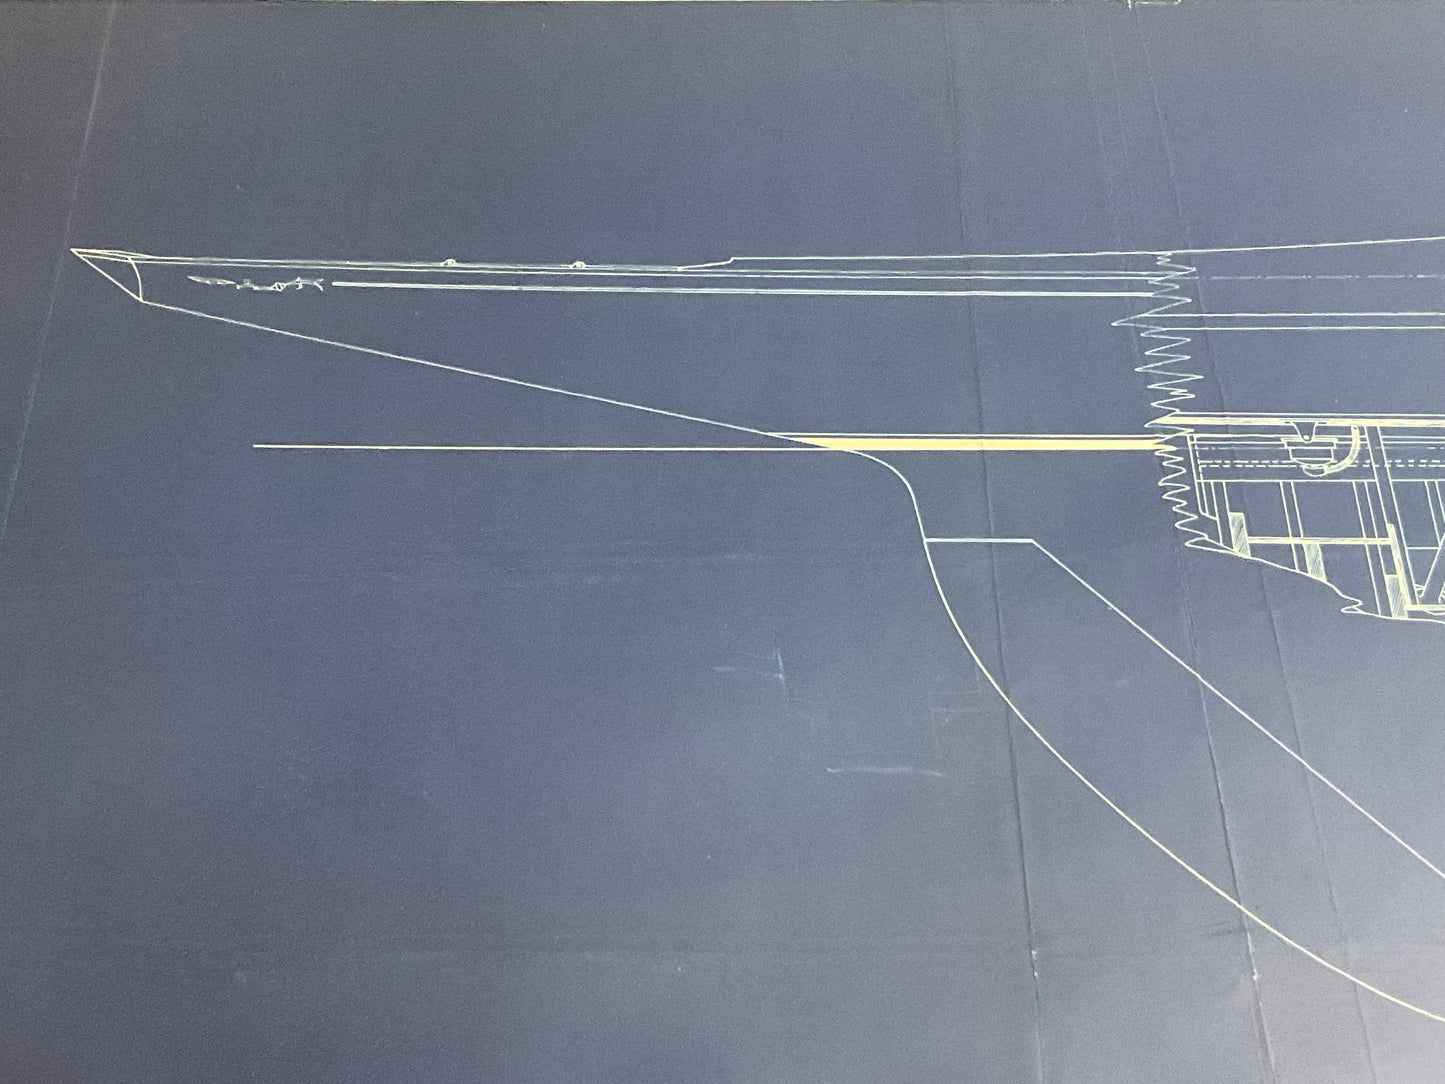 Yacht Blueprint of the Q Class Sloop "TARTAR"